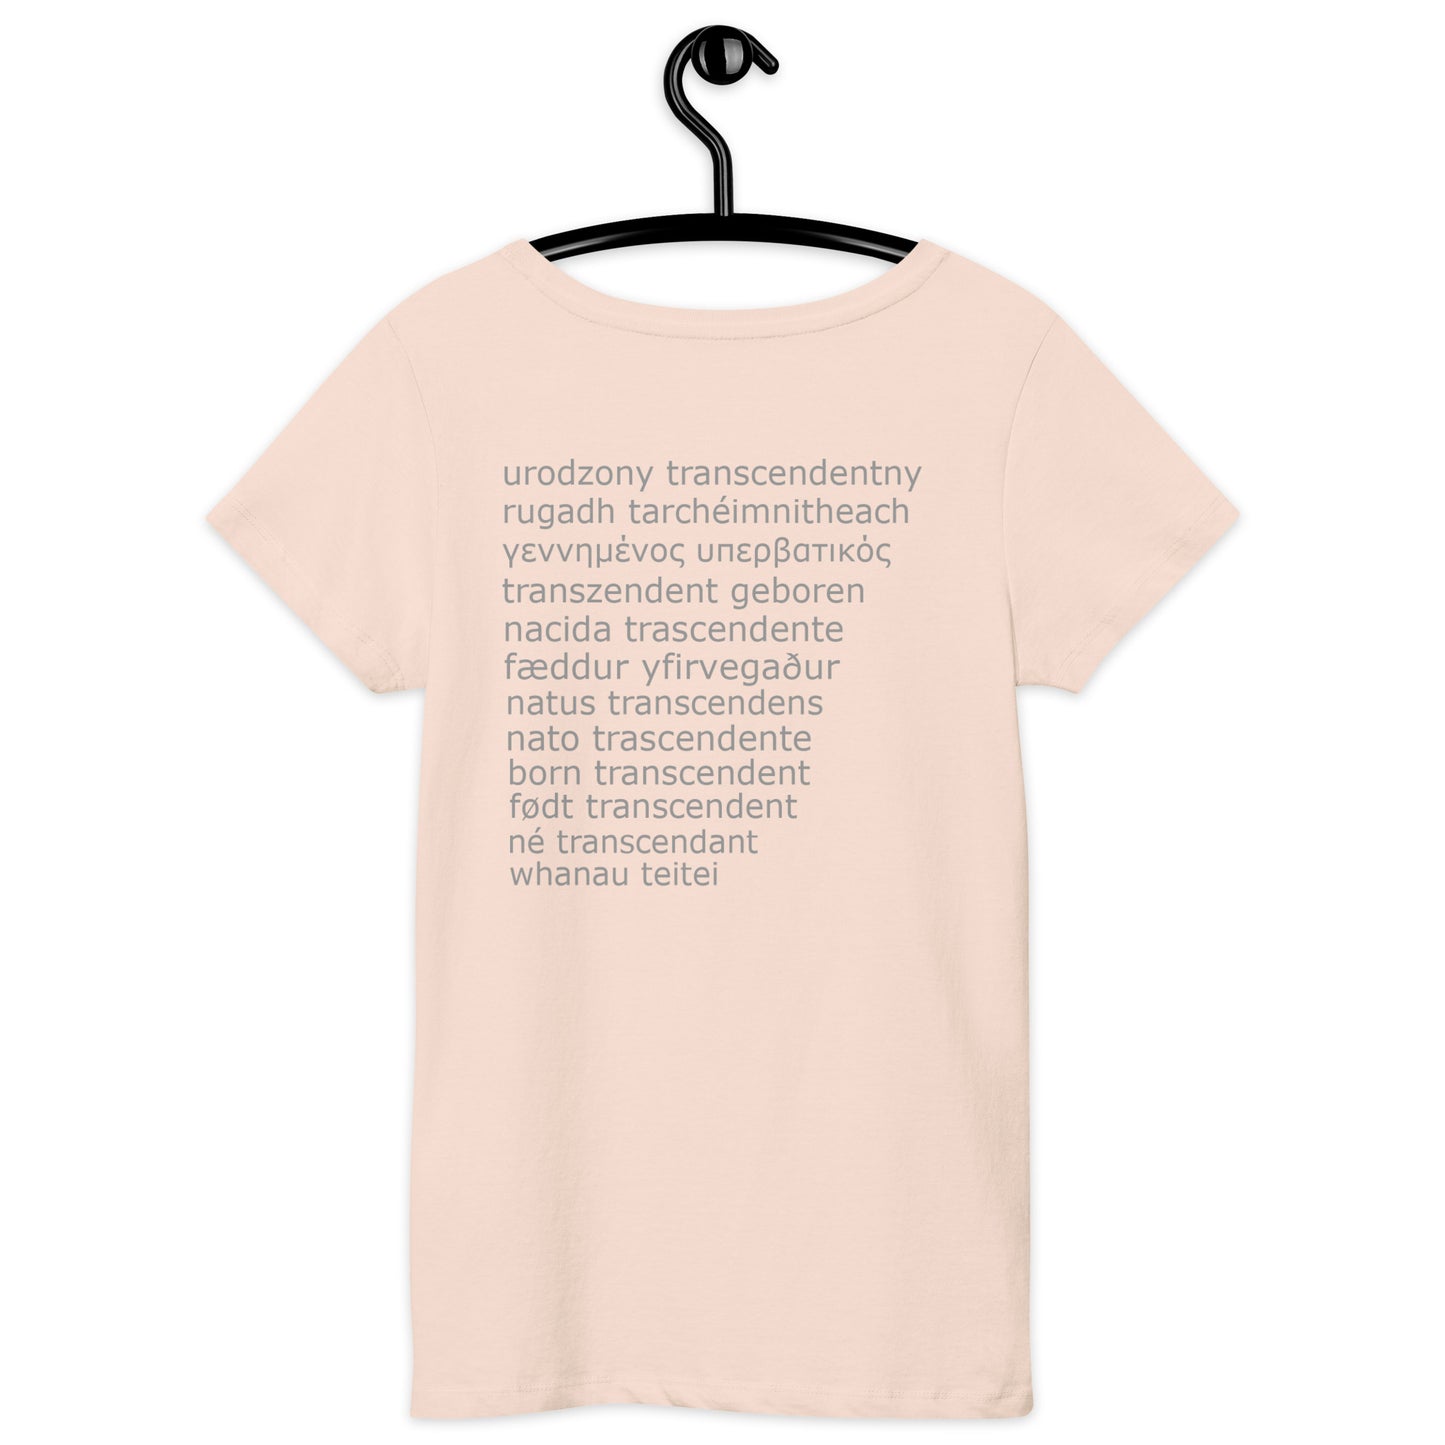 Bio Women's T-Shirt - Languages